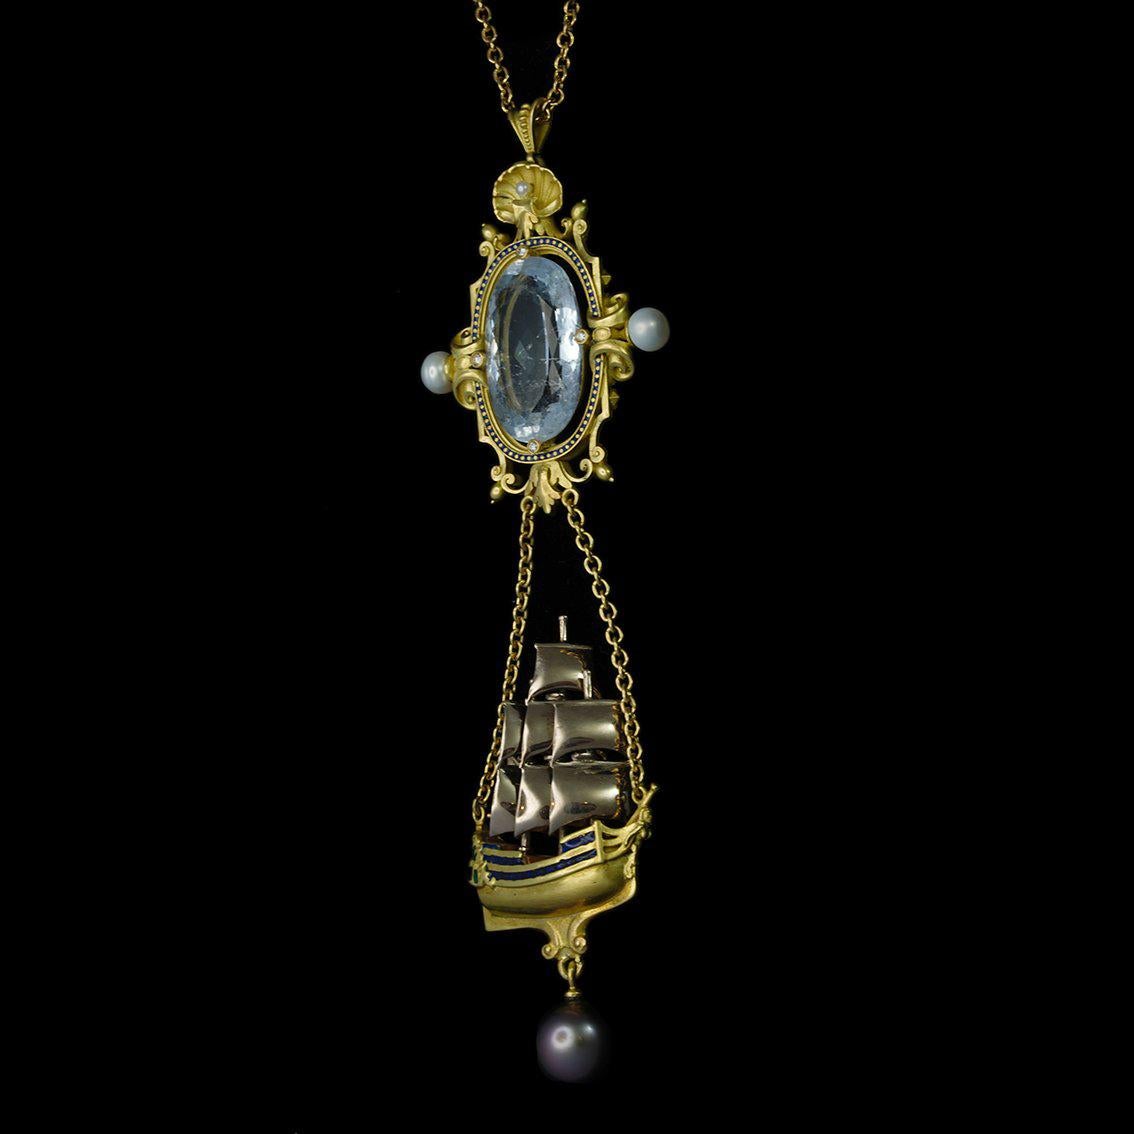 Aquamarine, Diamonds, Pearls, Enamel, 18kt Gold Antique Style Pendant Necklace For Sale 9